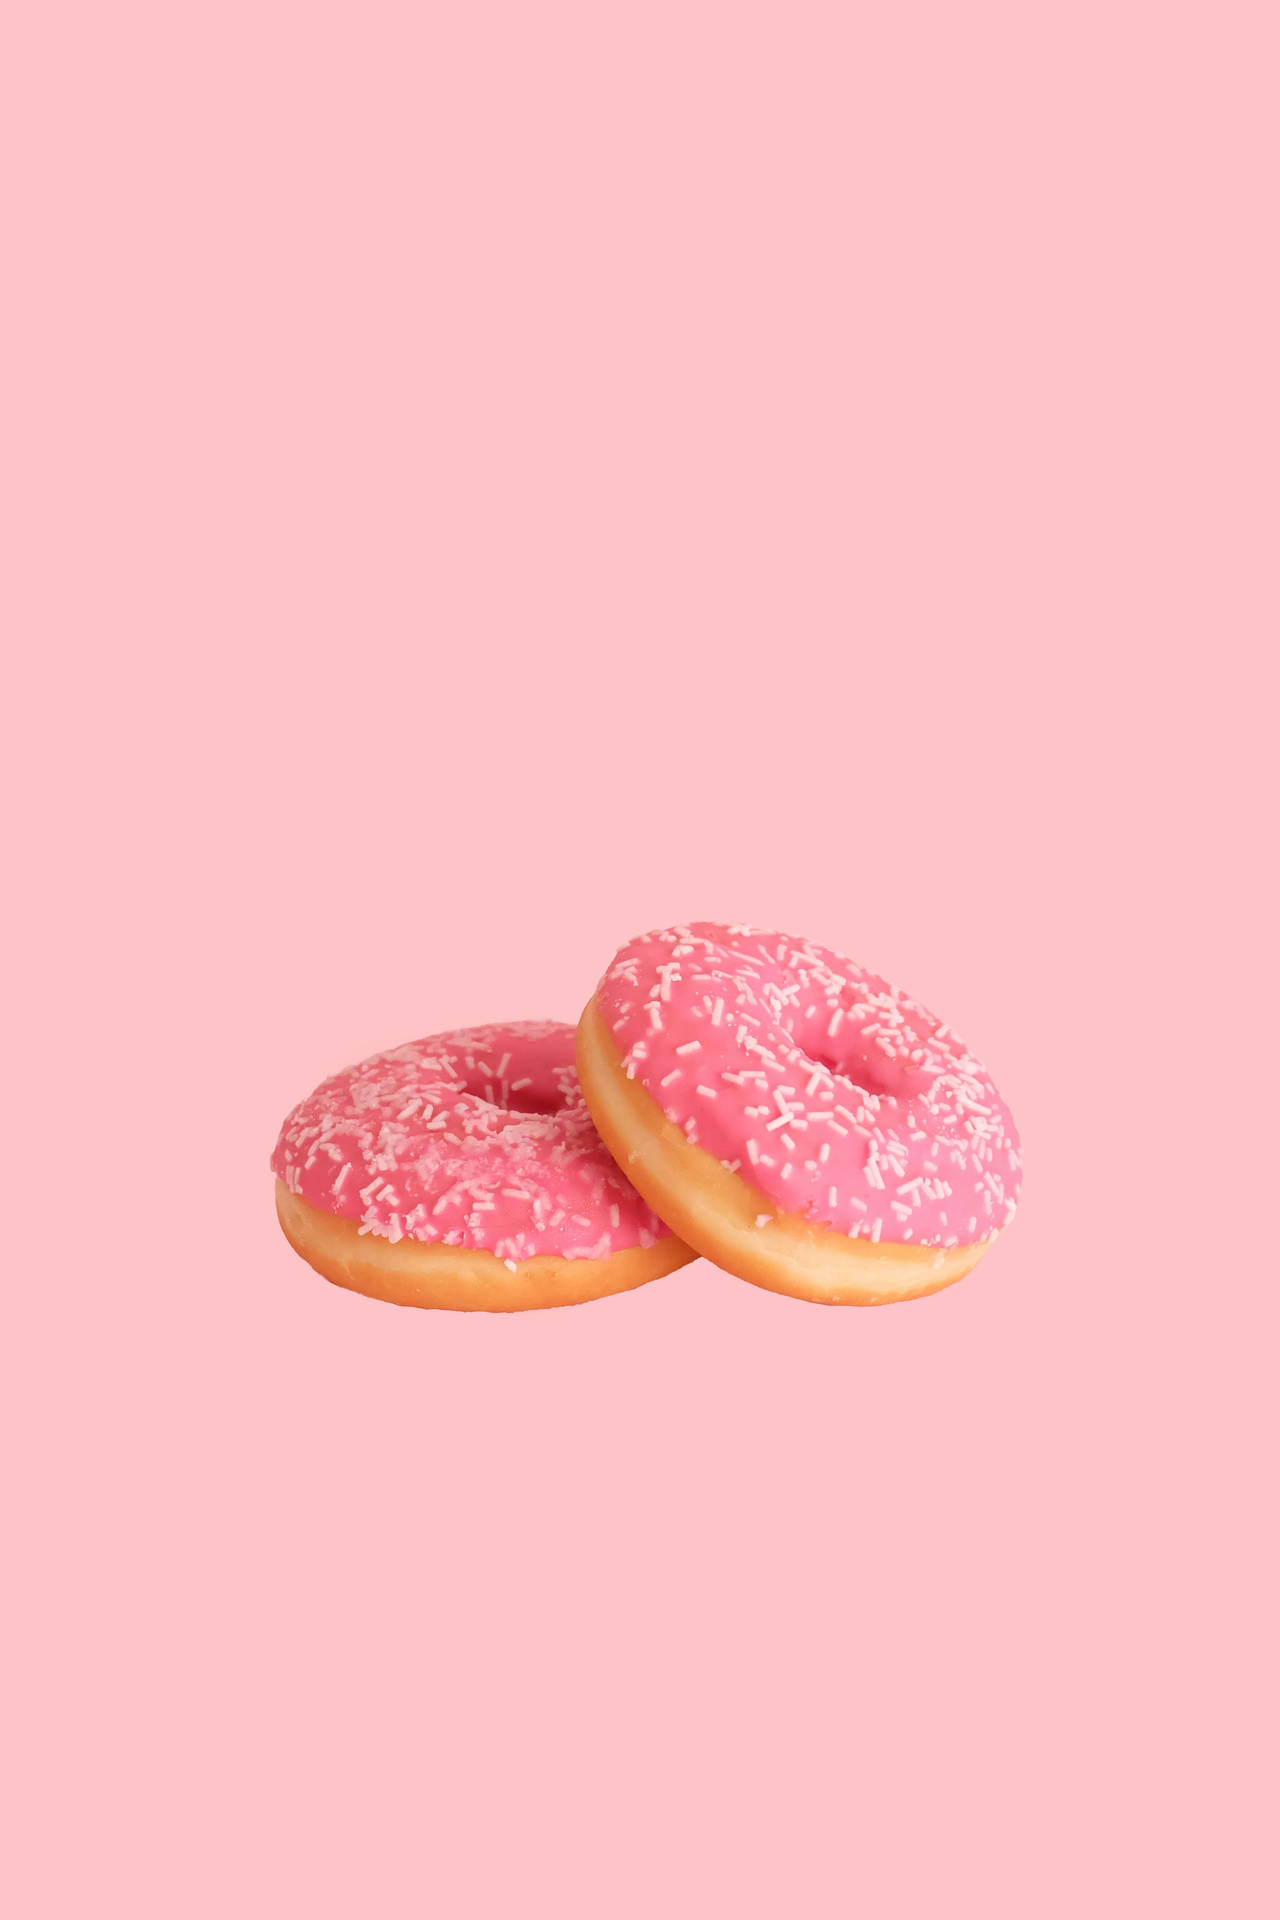 Pastel Iphone Pink Food Wallpaper